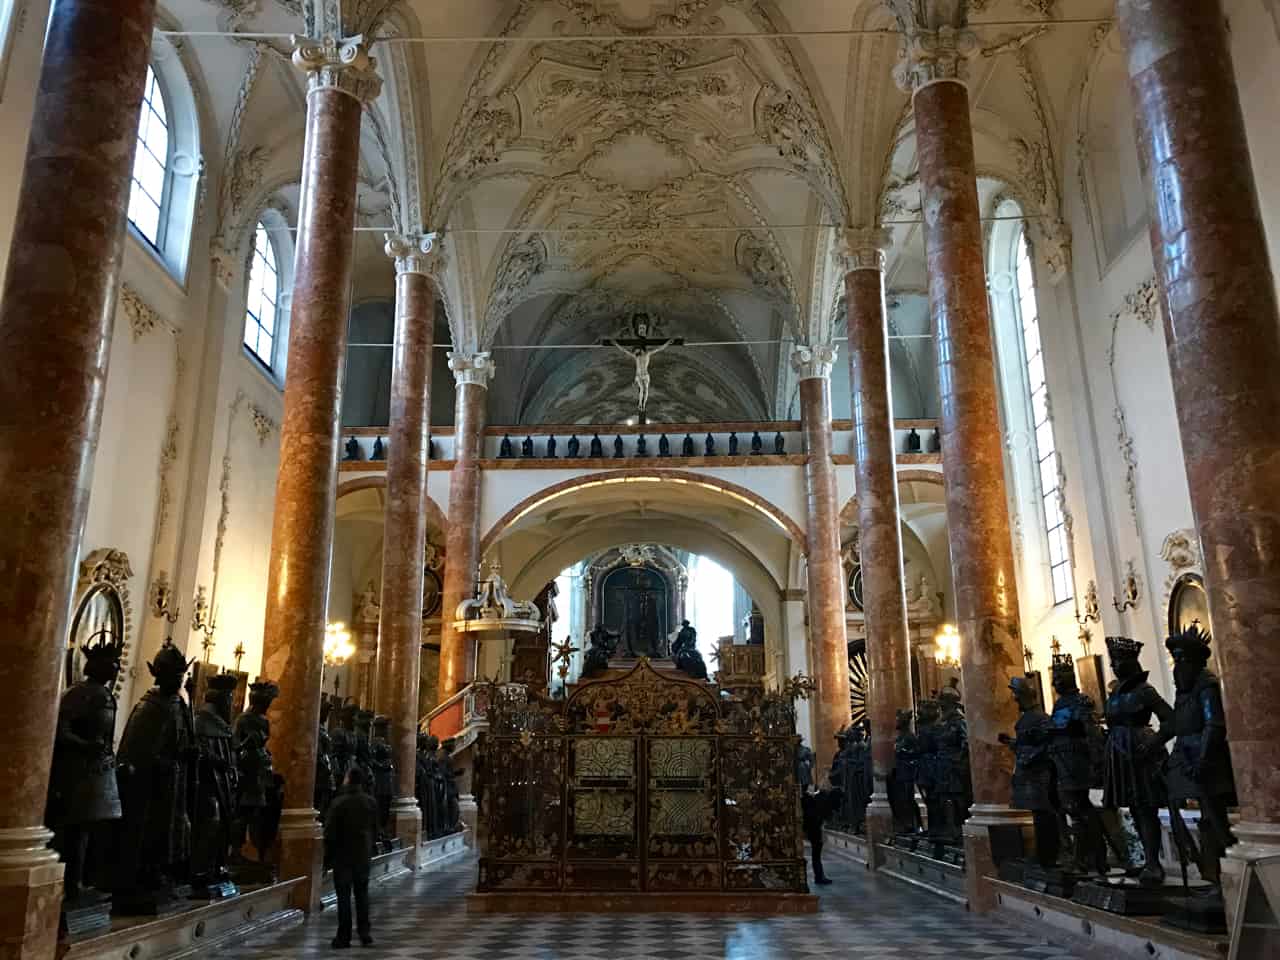 Beautiful interior of Innsbruck's Hofkirche.